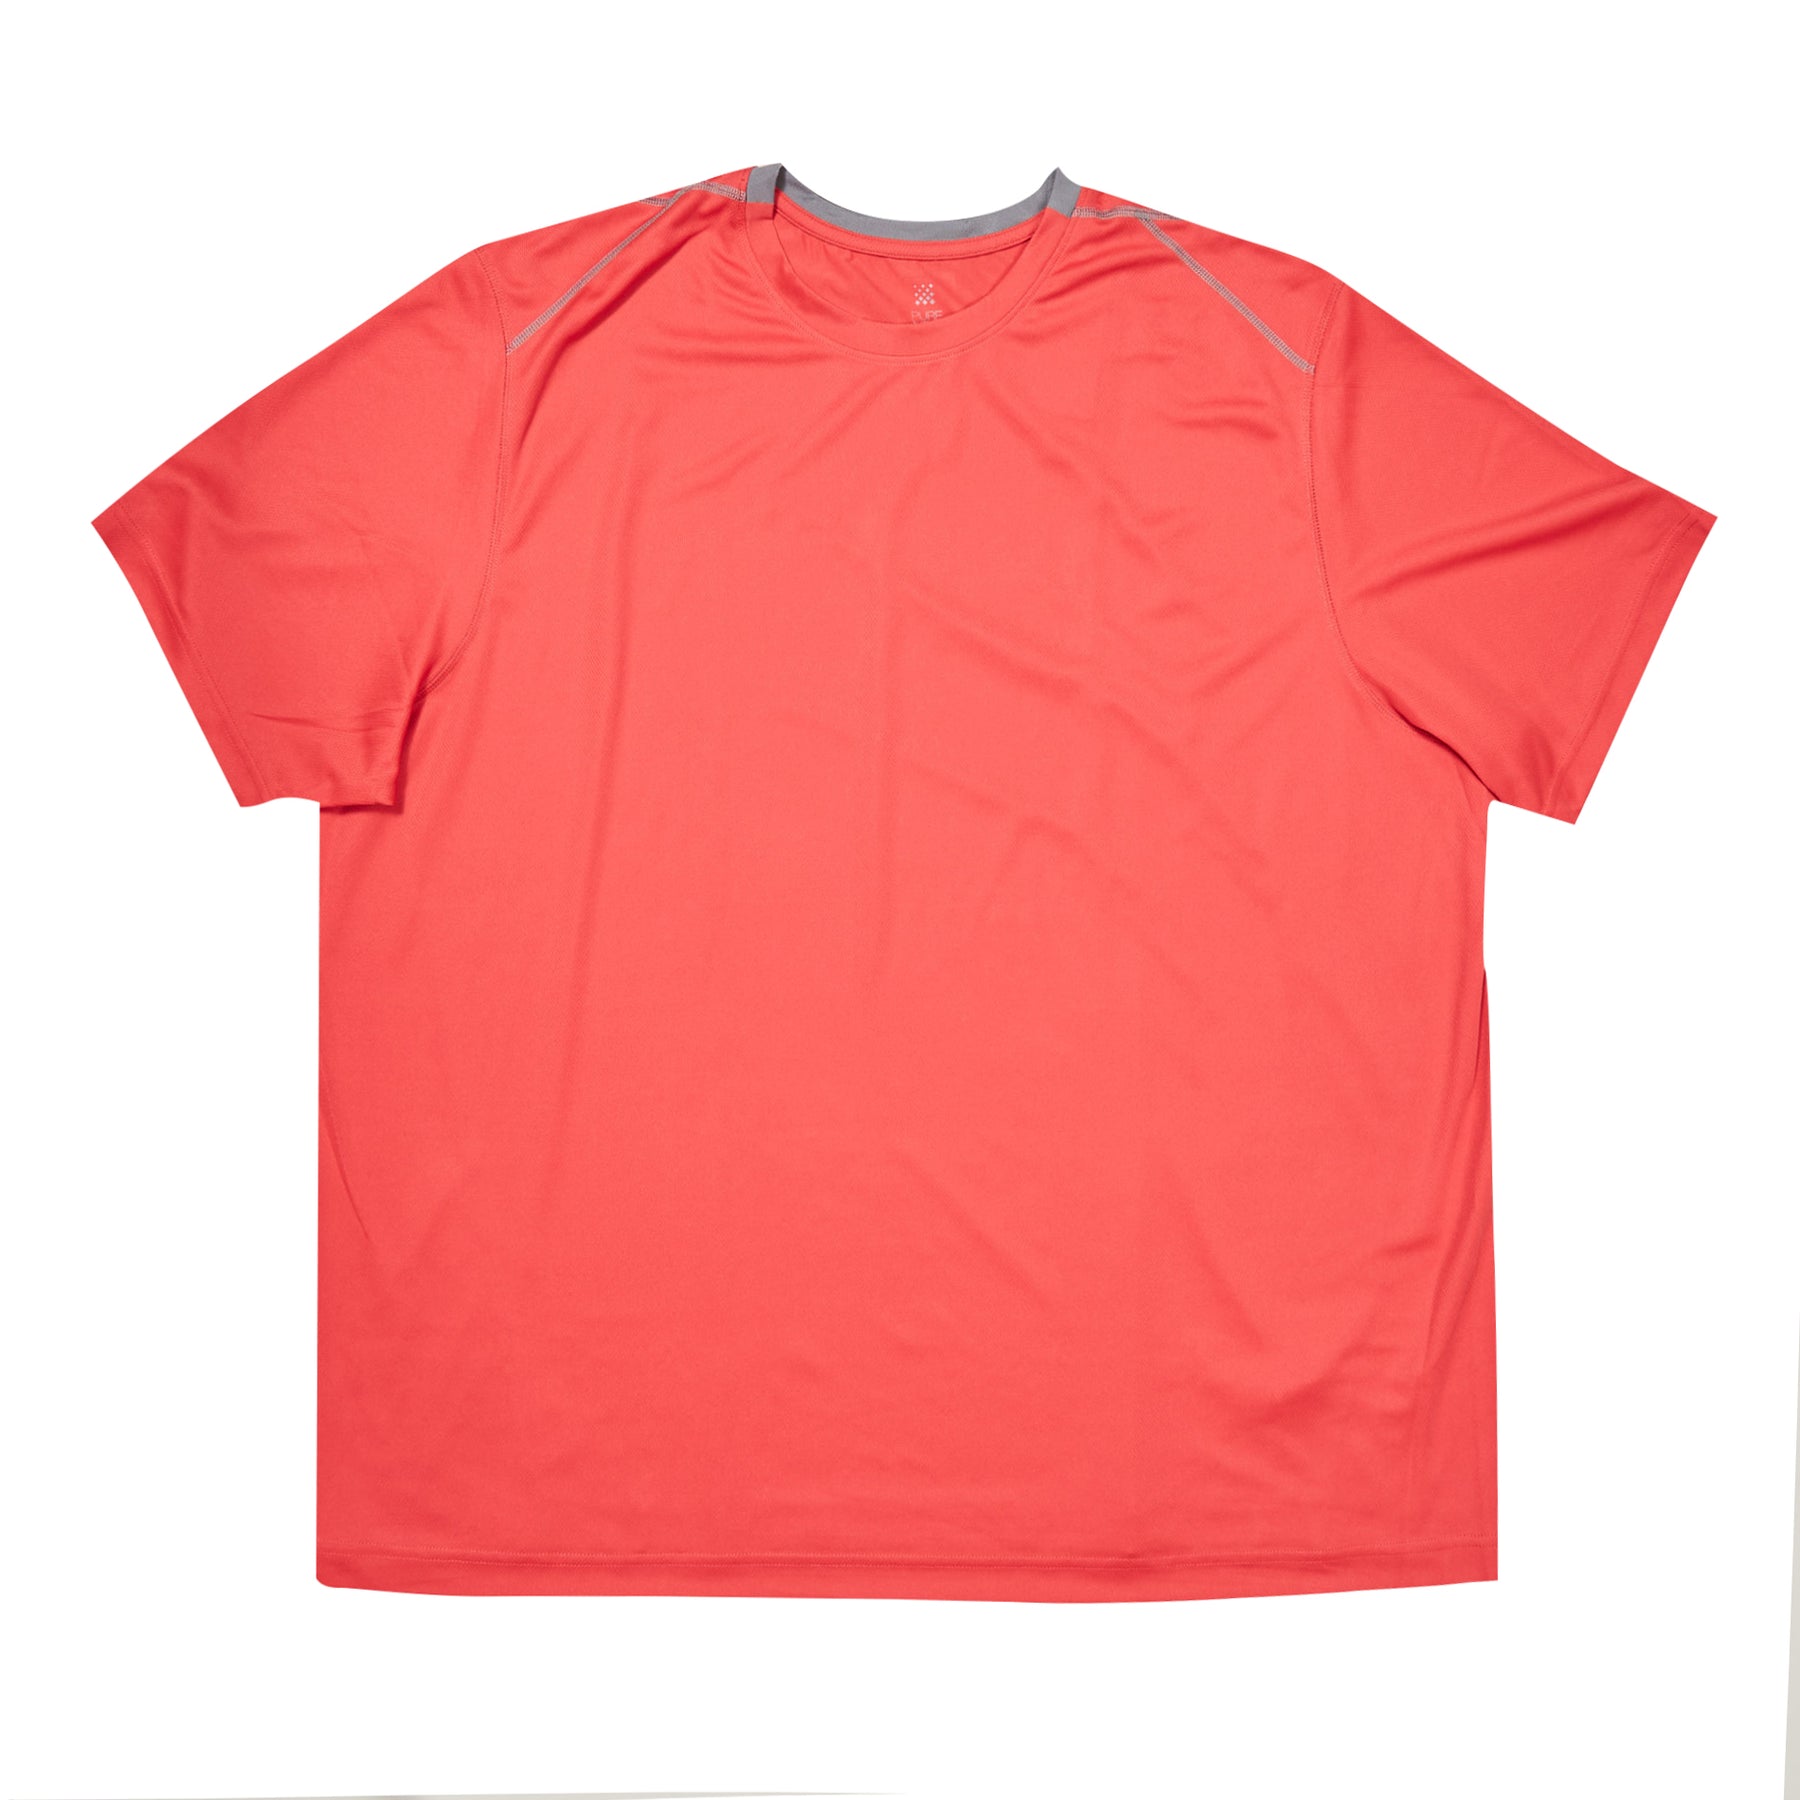 pure nrg, Shirts & Tops, Kids Large 416 Pure Nrg Athletics Shirt